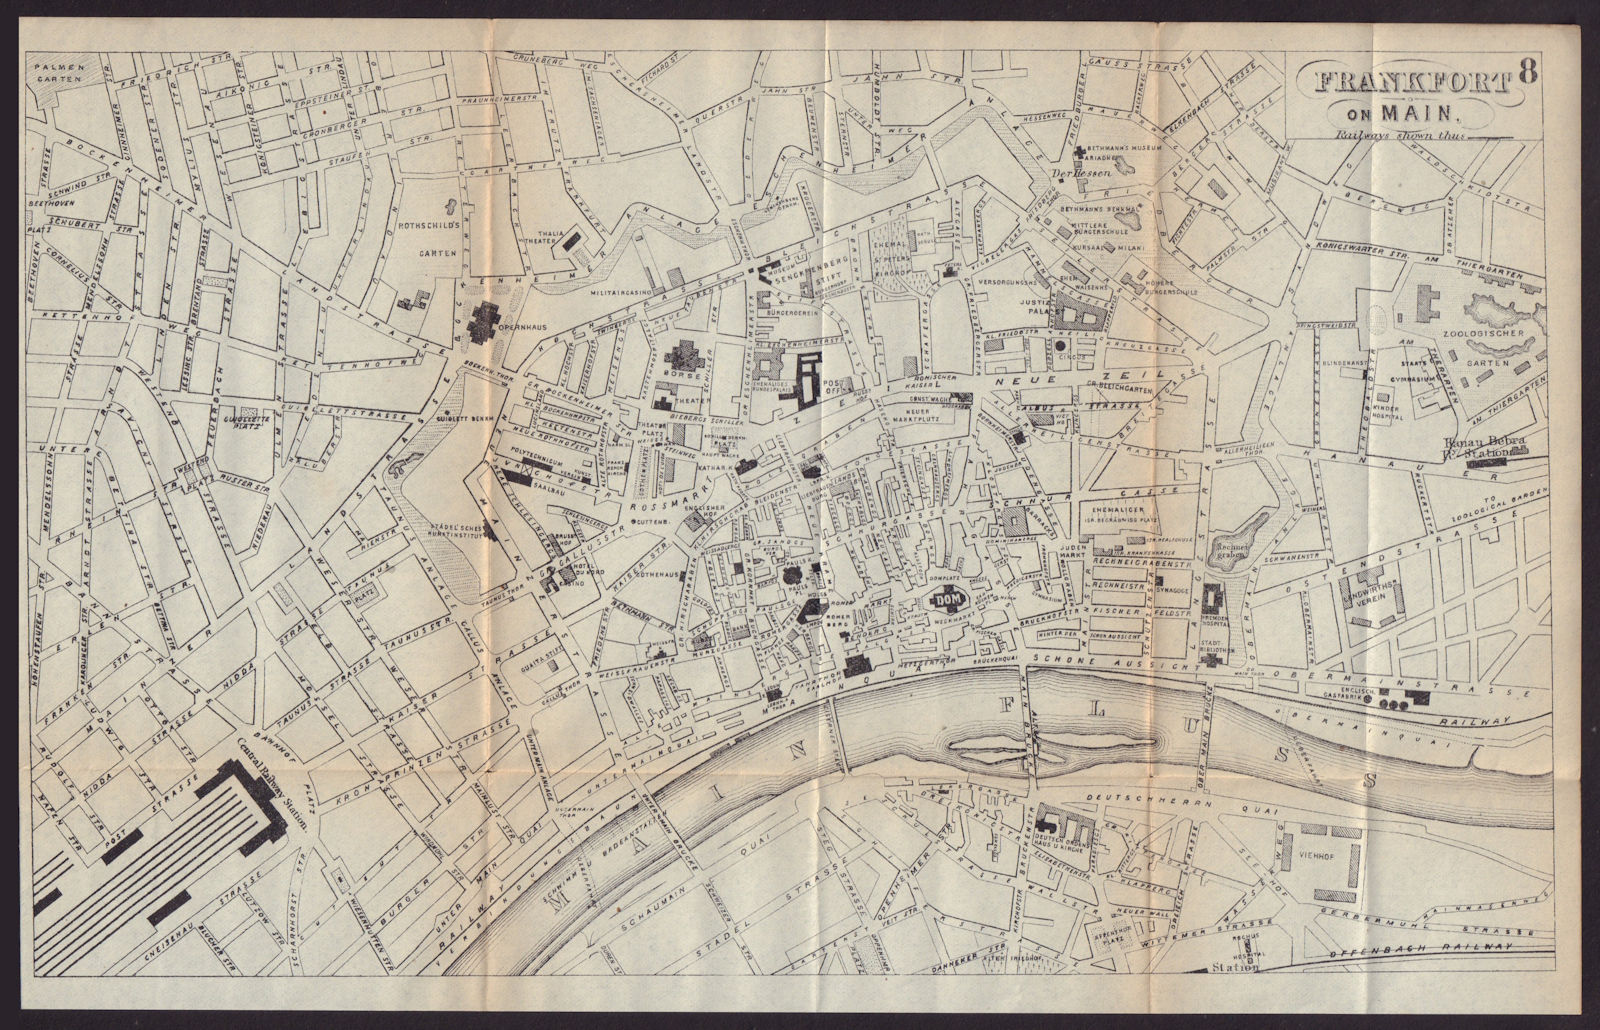 FRANKFURT AM MAIN antique town plan city map. Germany. BRADSHAW 1893 old